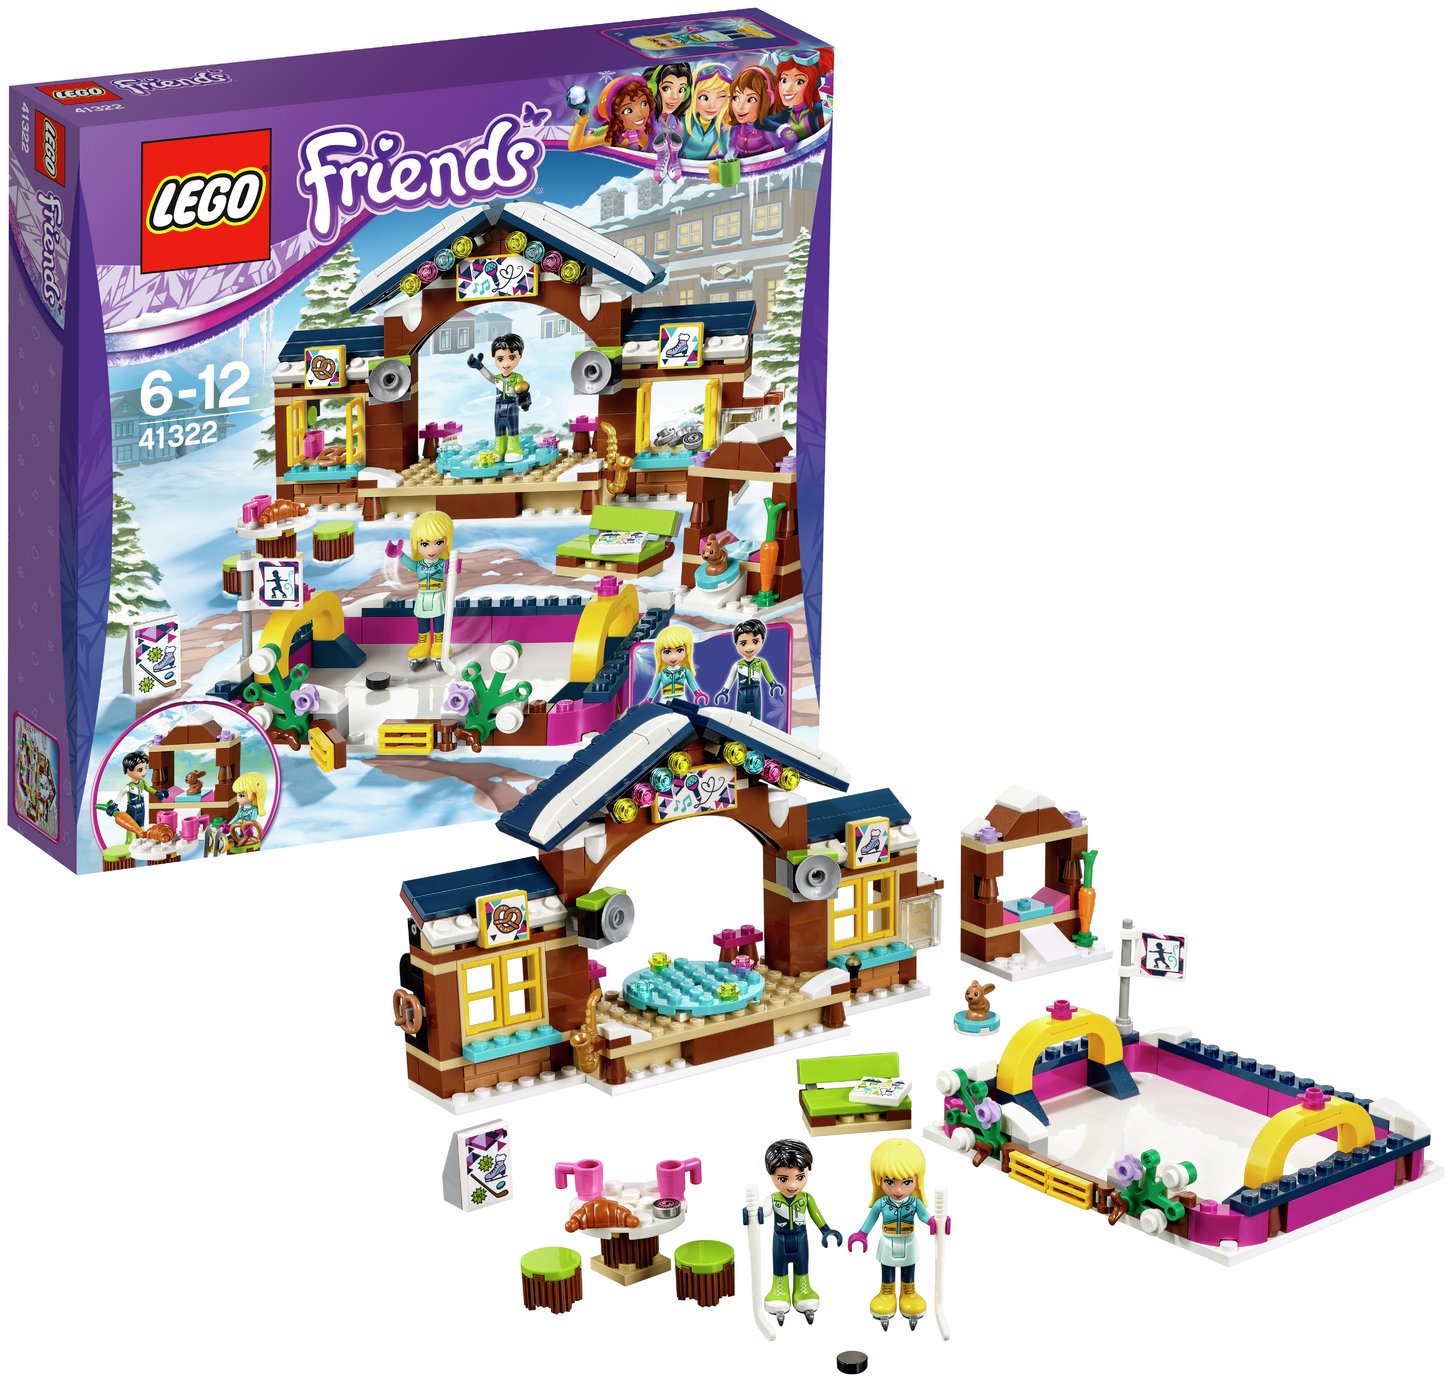 LEGO Friends Snow Resort Ice Rink - 41322